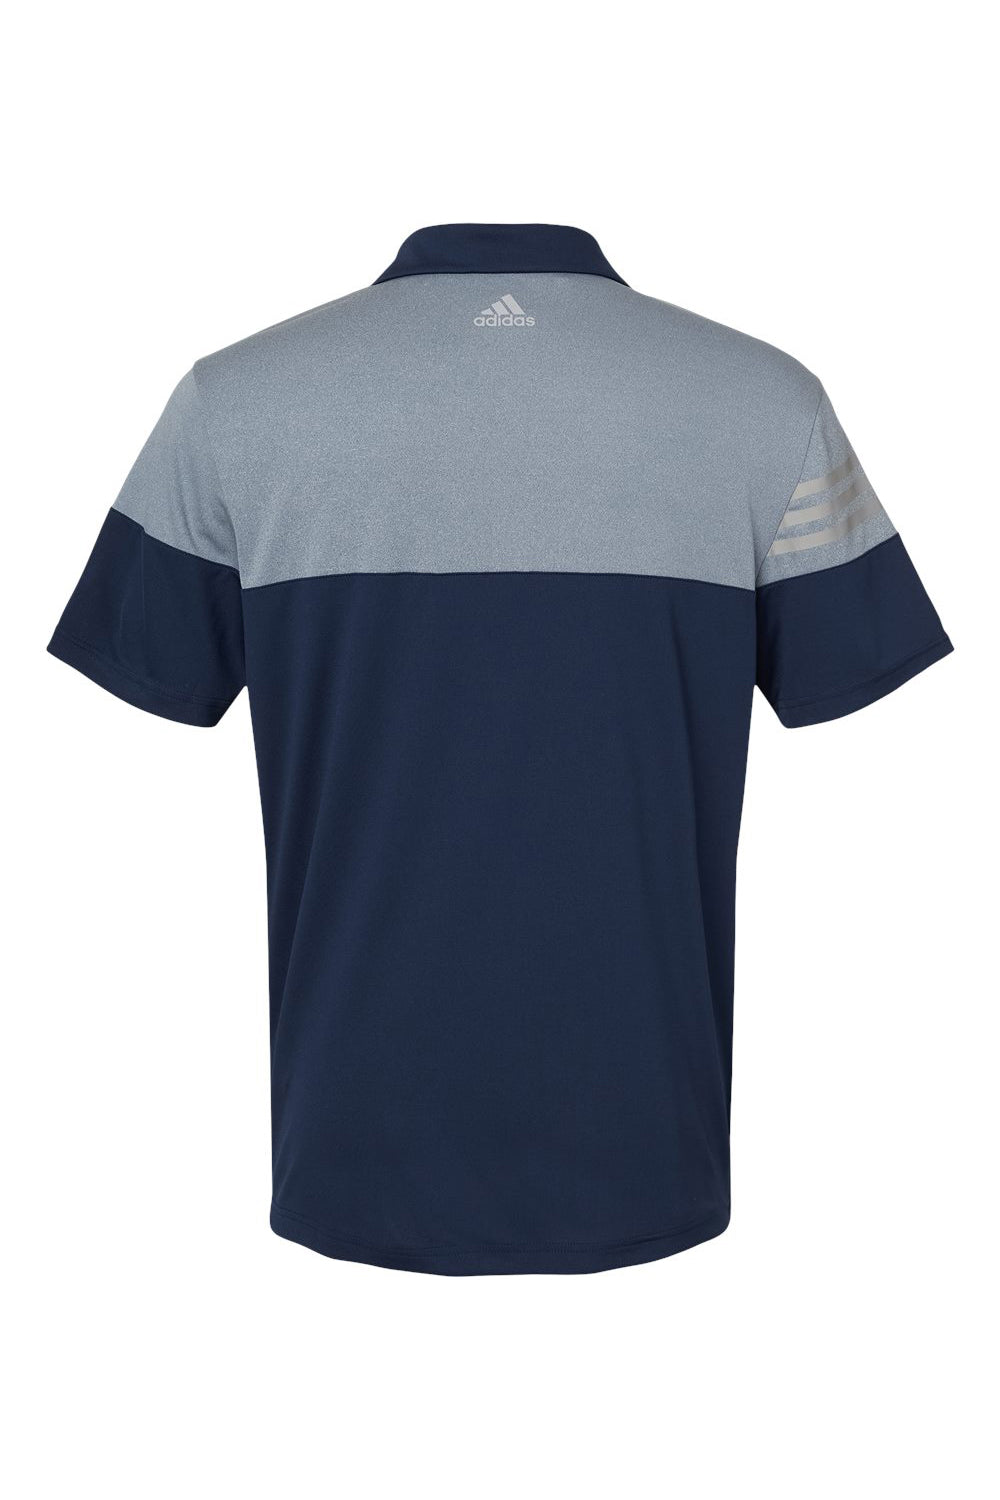 Adidas A213 Mens 3 Stripes Heathered Colorblock Short Sleeve Polo Shirt Collegiate Navy Blue/Mid Grey Flat Back